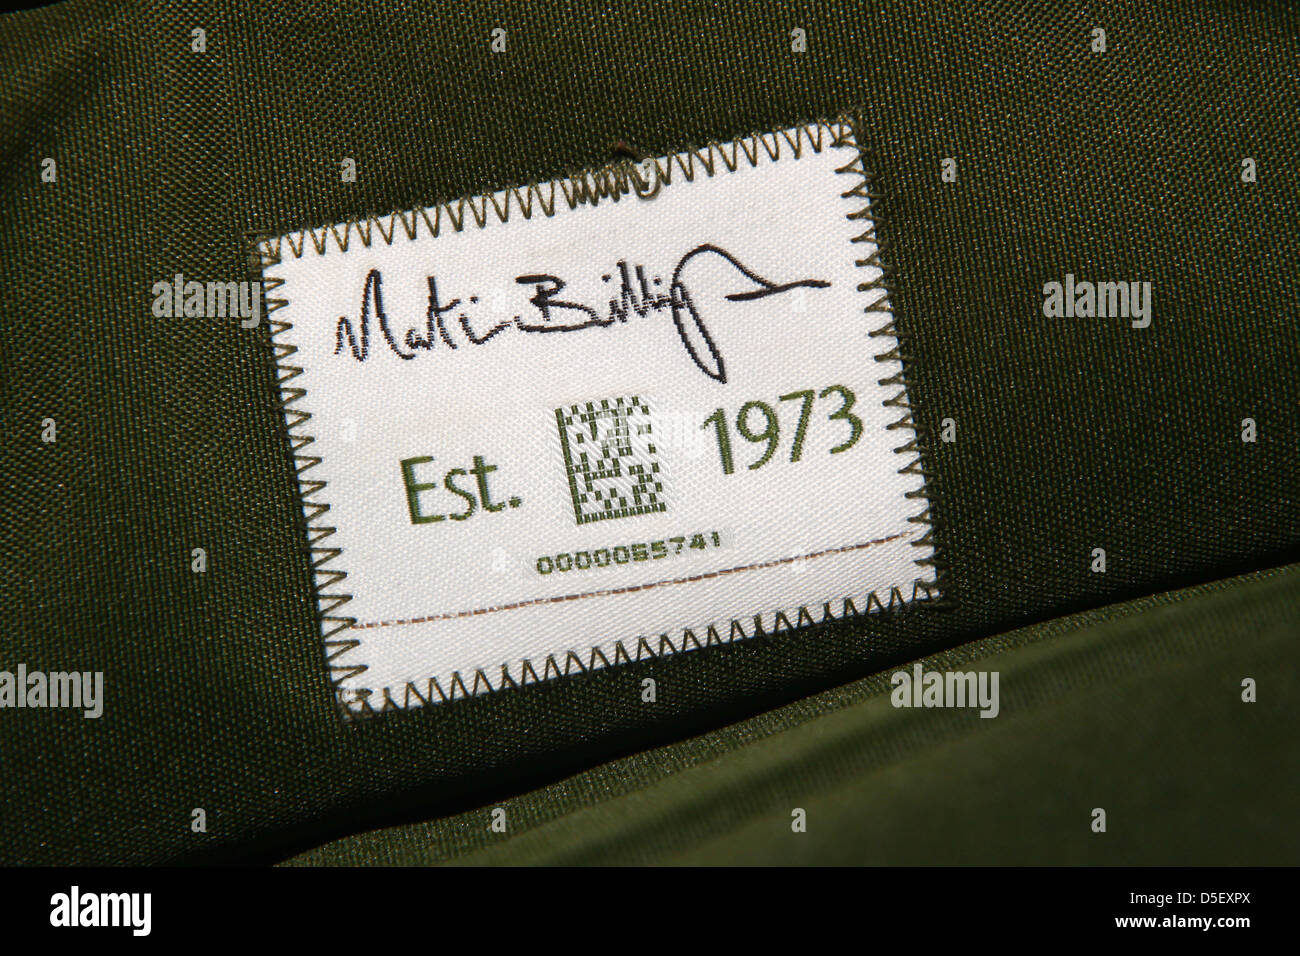 Martin Billingham signature label in camera bag Stock Photo